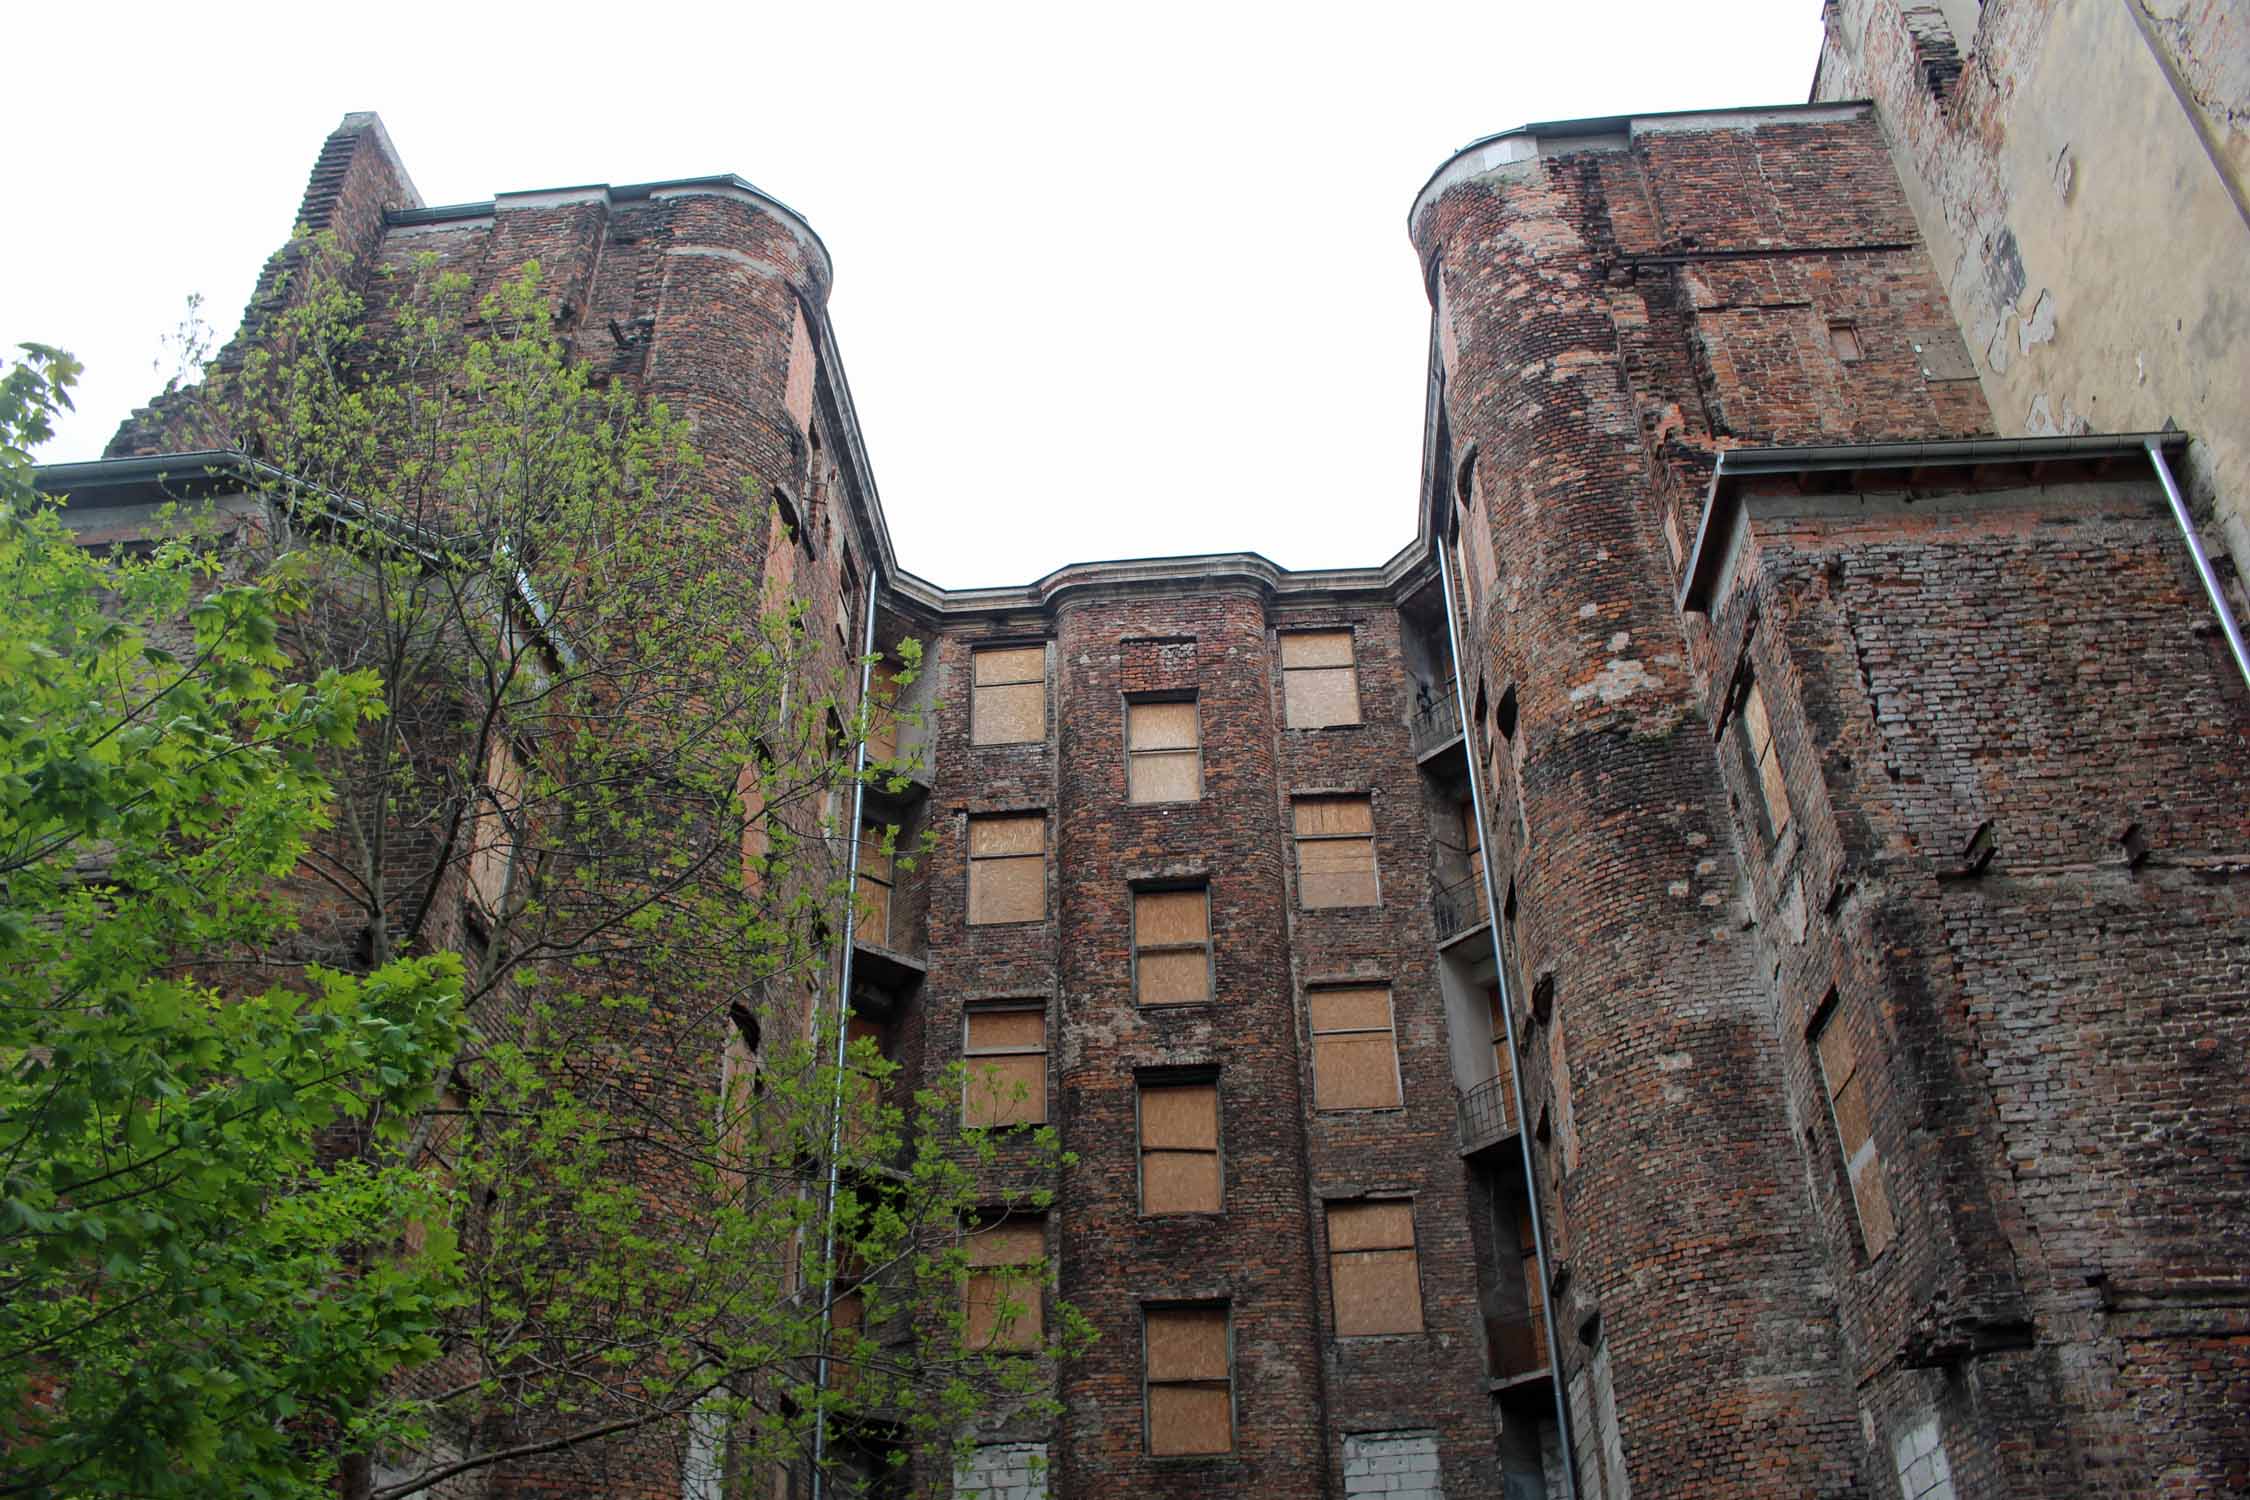 Ghetto de Varsovie, immeuble